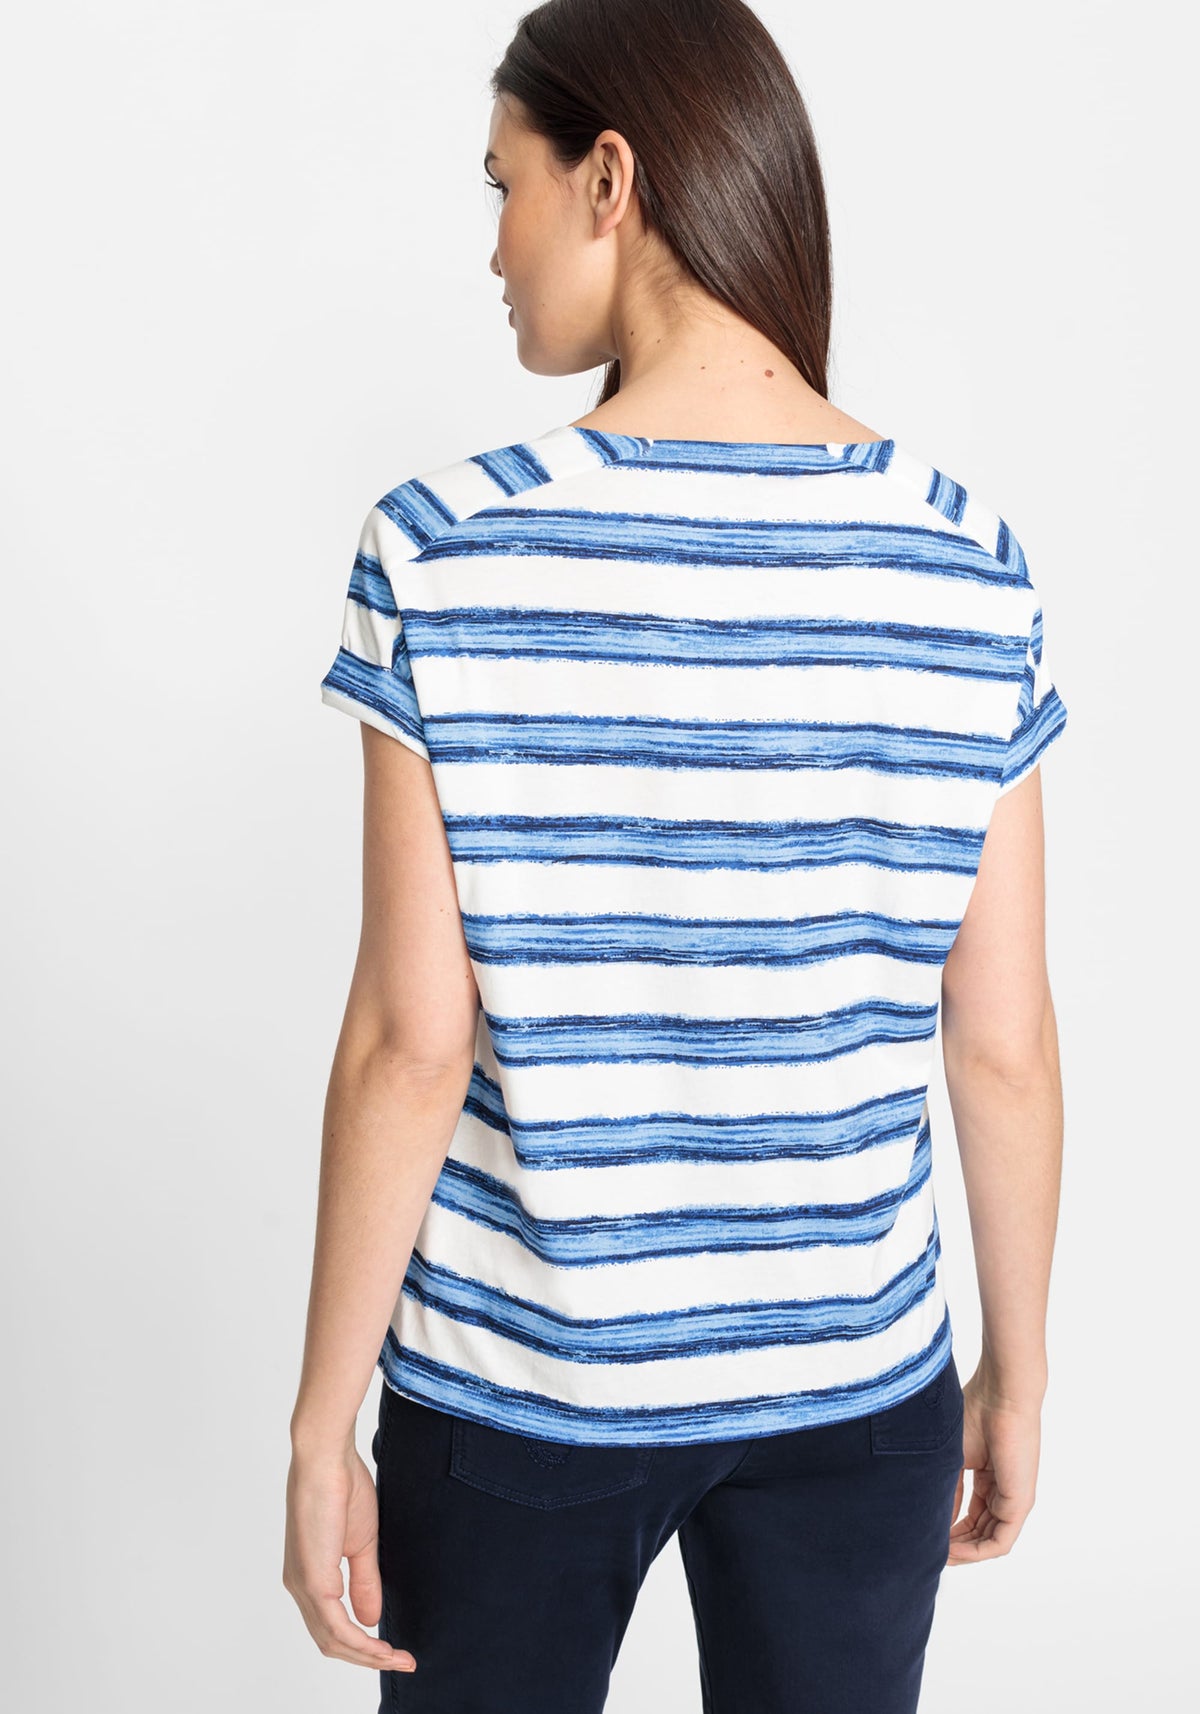 Cotton Blend Short Sleeve Placement Print Split V-Neck T-Shirt containing TENCEL™ Modal